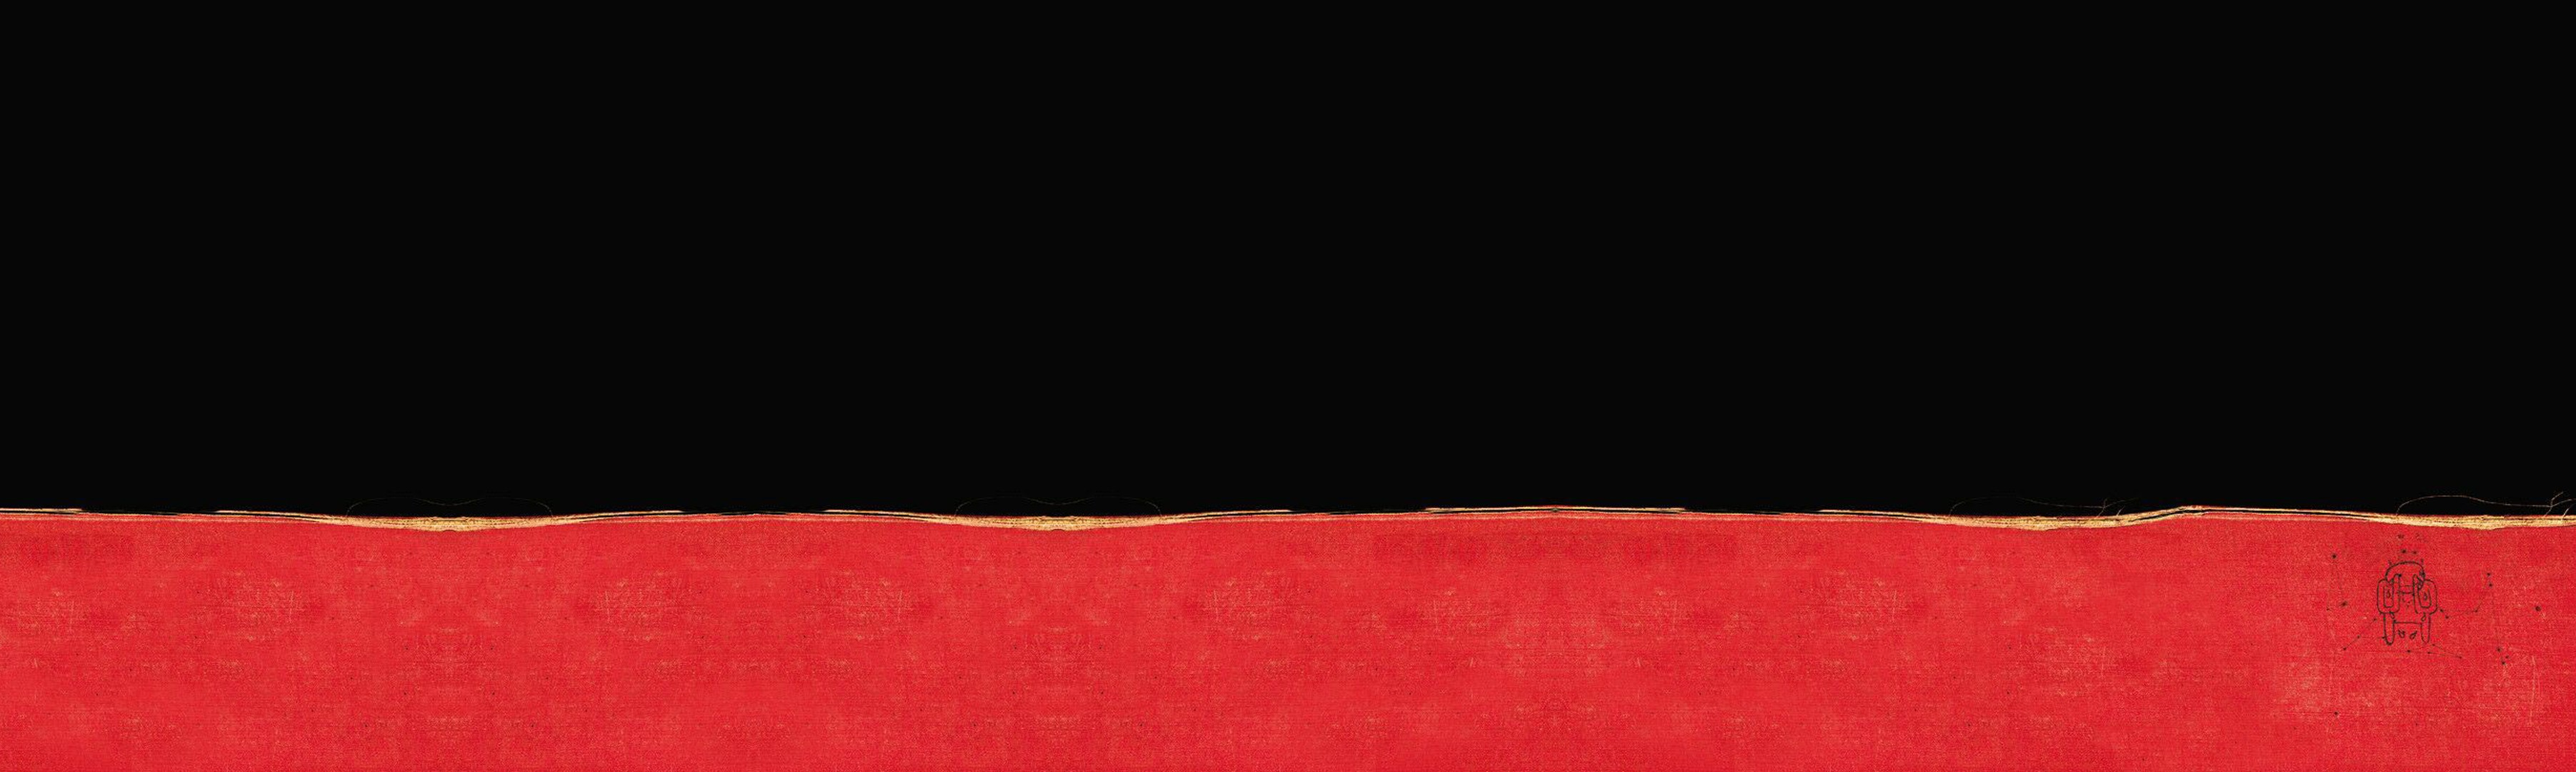 General 3606x1080 minimalism red black Radiohead music